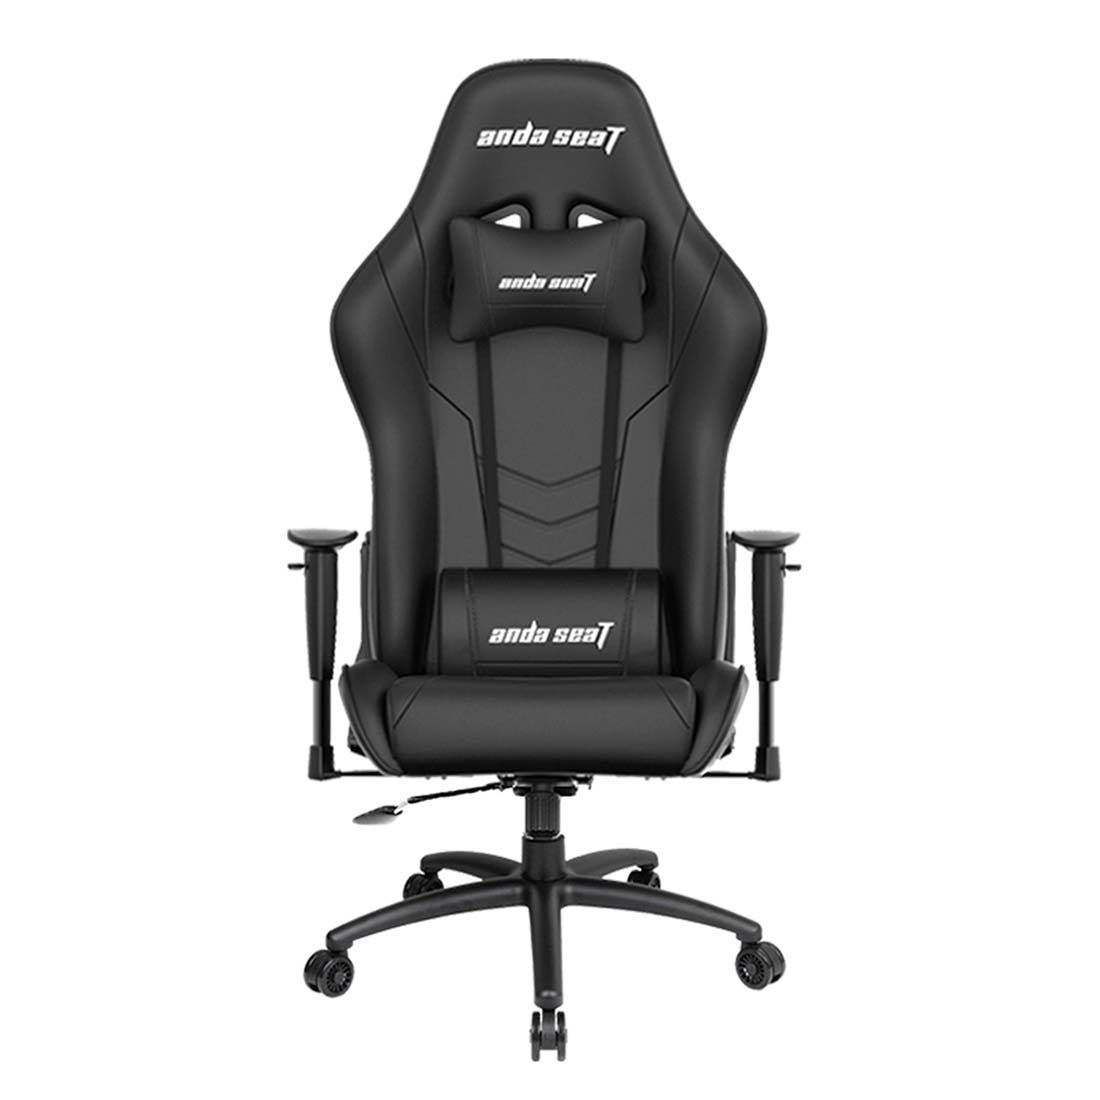 Anda Seat Axe E-Series High Back Gaming Chair Black เก้าอี้เล่นเกมส์ อันดาซีท สีดำ ขนาด 93 x 68 x 32 cm1